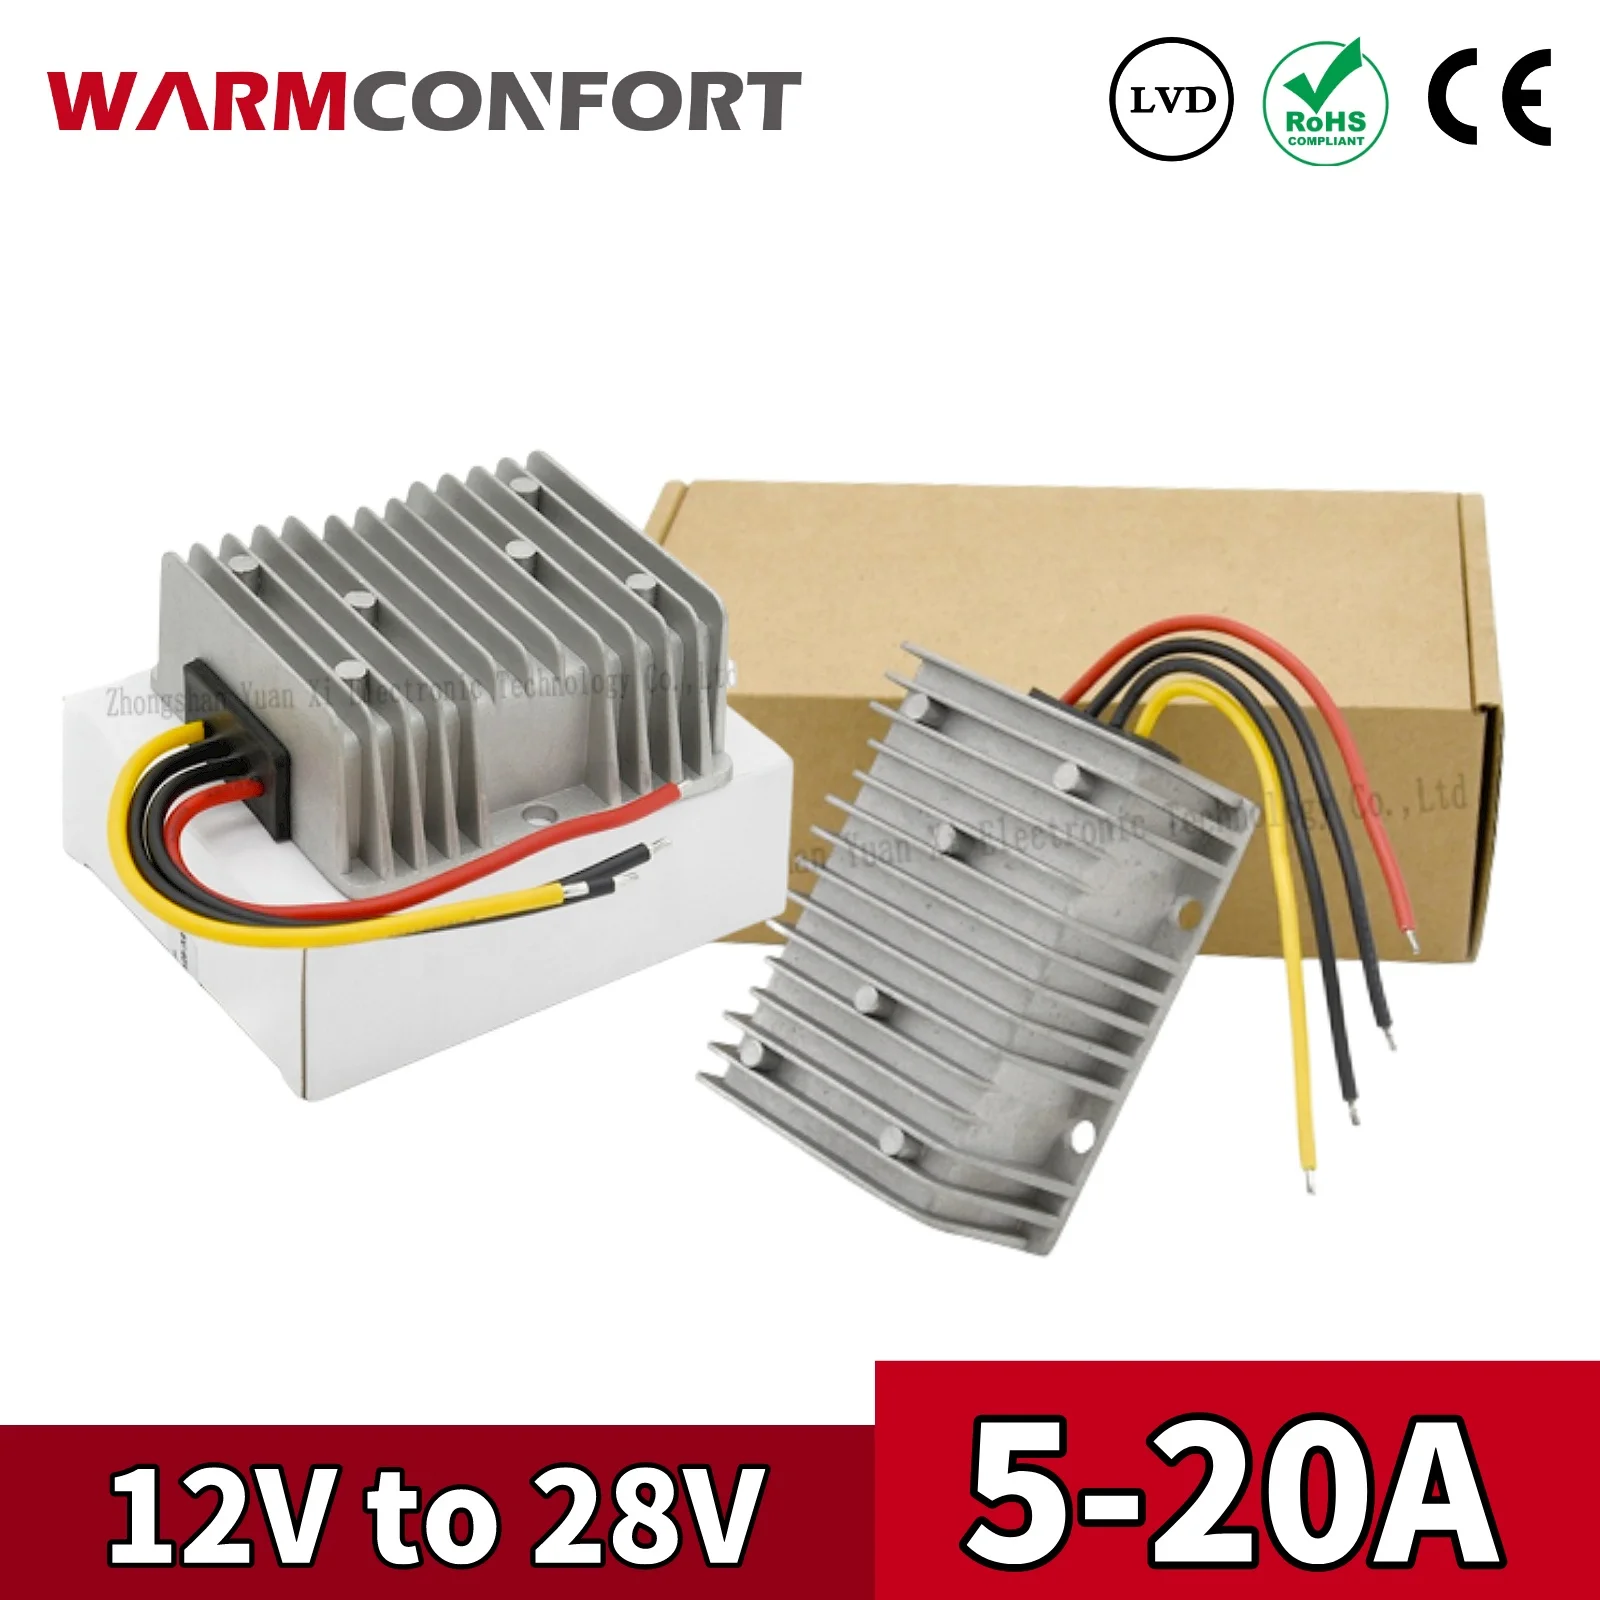 

Warmconfort DC 12V to 28V 5A 8A 10A 12A 15A 20A DC Step-up Power Converter Regulator Car Laptop Power Supply CE